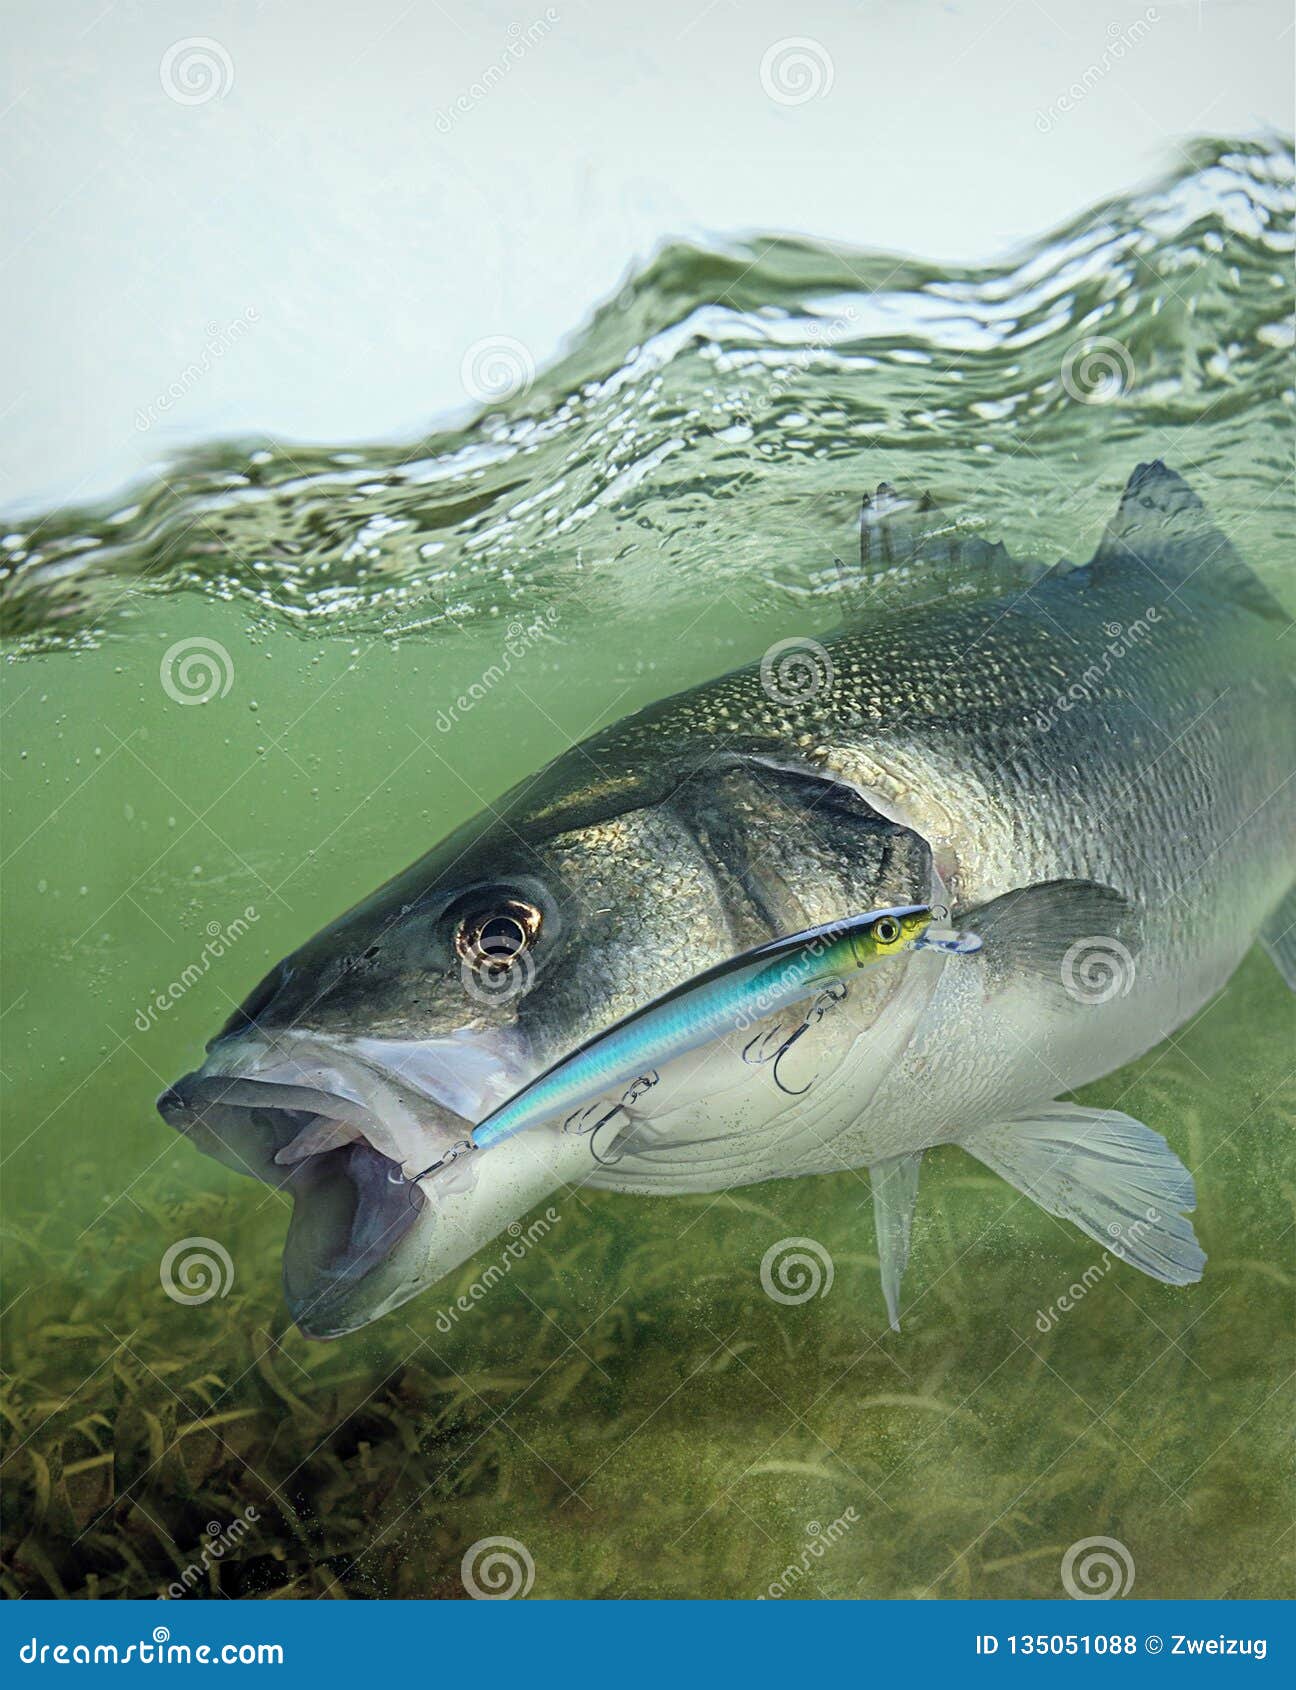 European Sea Bass Hooked on Rapala Max Rap Lure Stock Photo - Image of  lure, rapala: 135051088